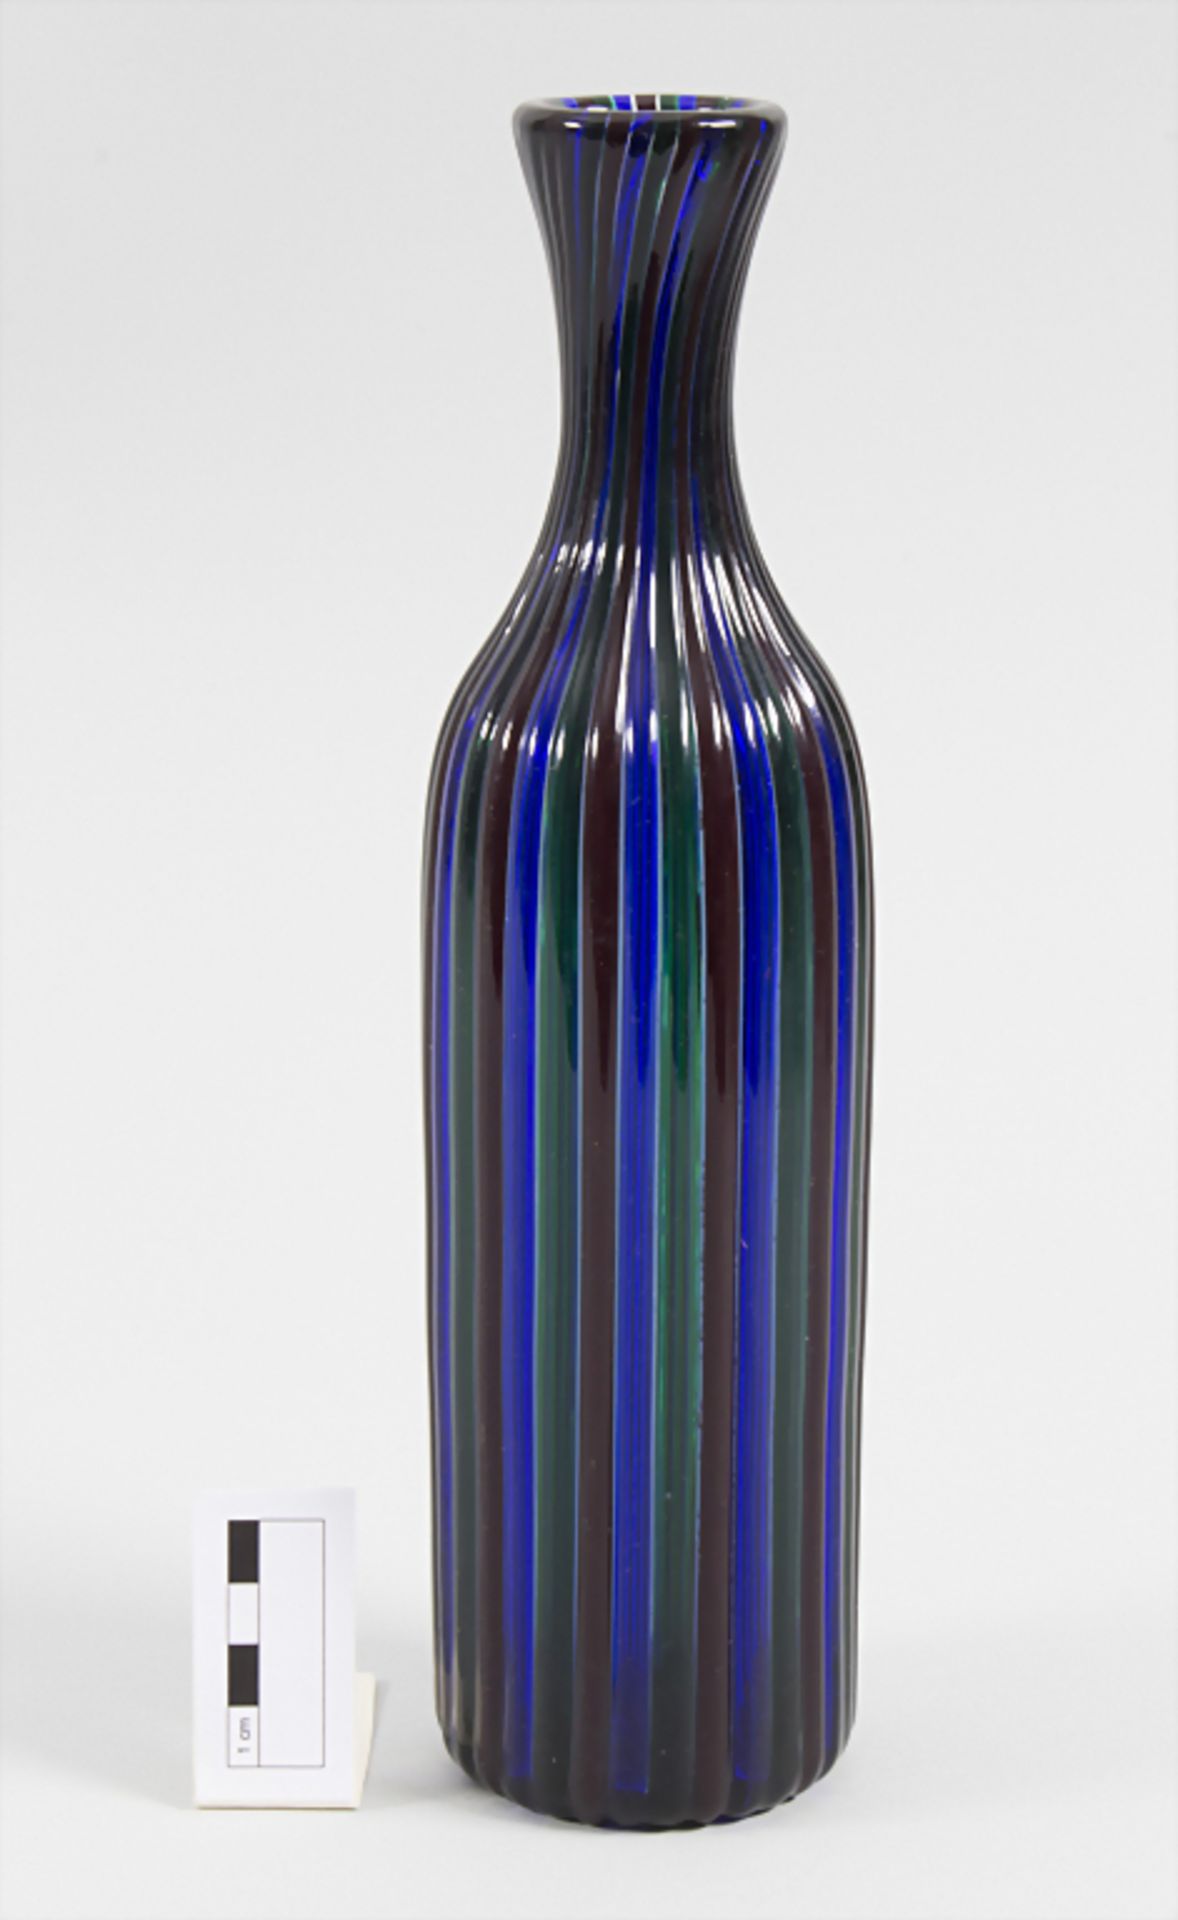 Glasziervase / A decorative vase, Venini, Murano, 50/60er Jahre - Image 2 of 5